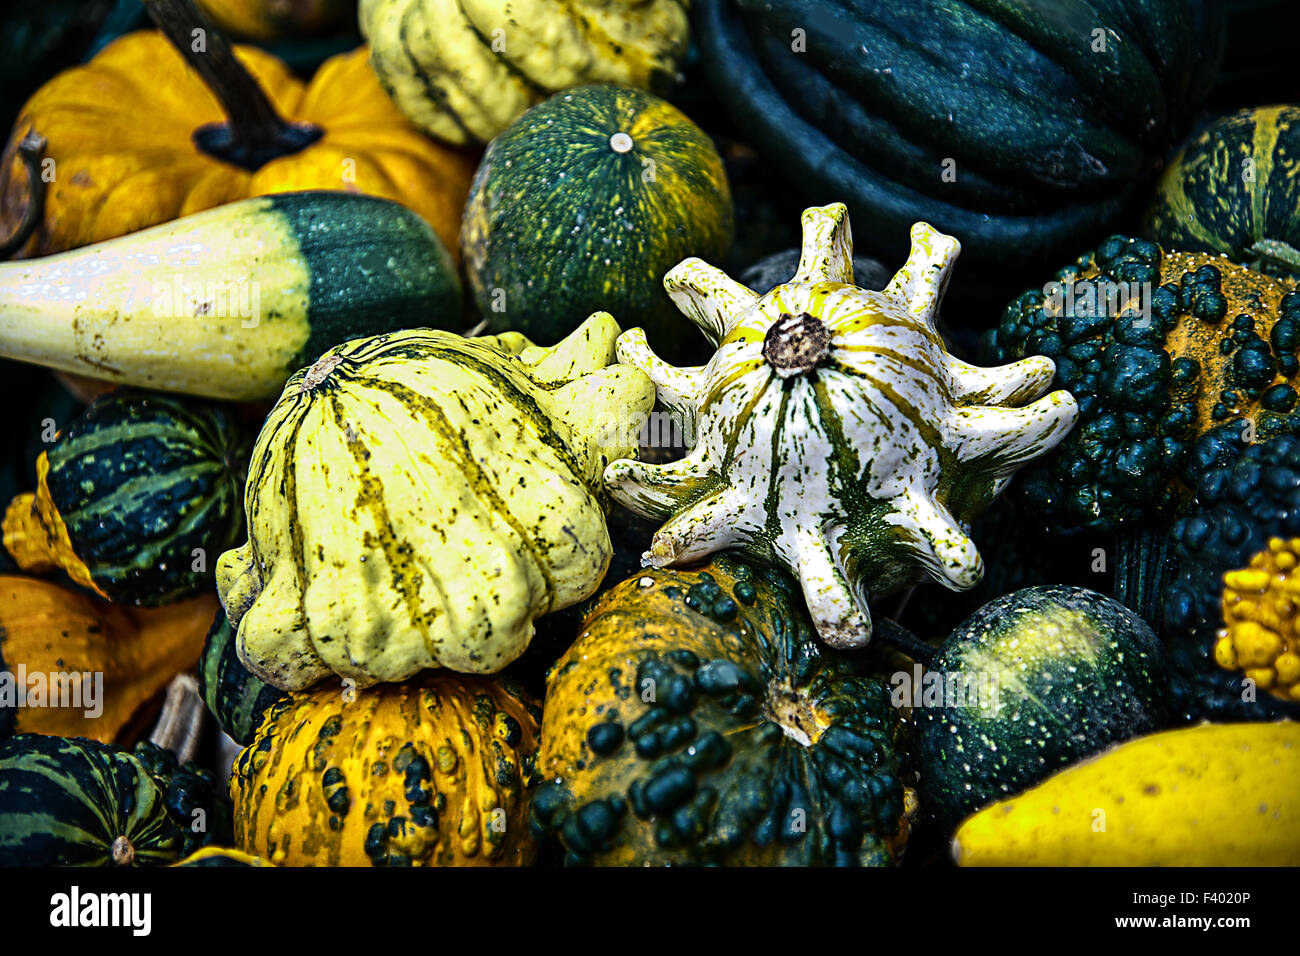 decorative gourd Stock Photo